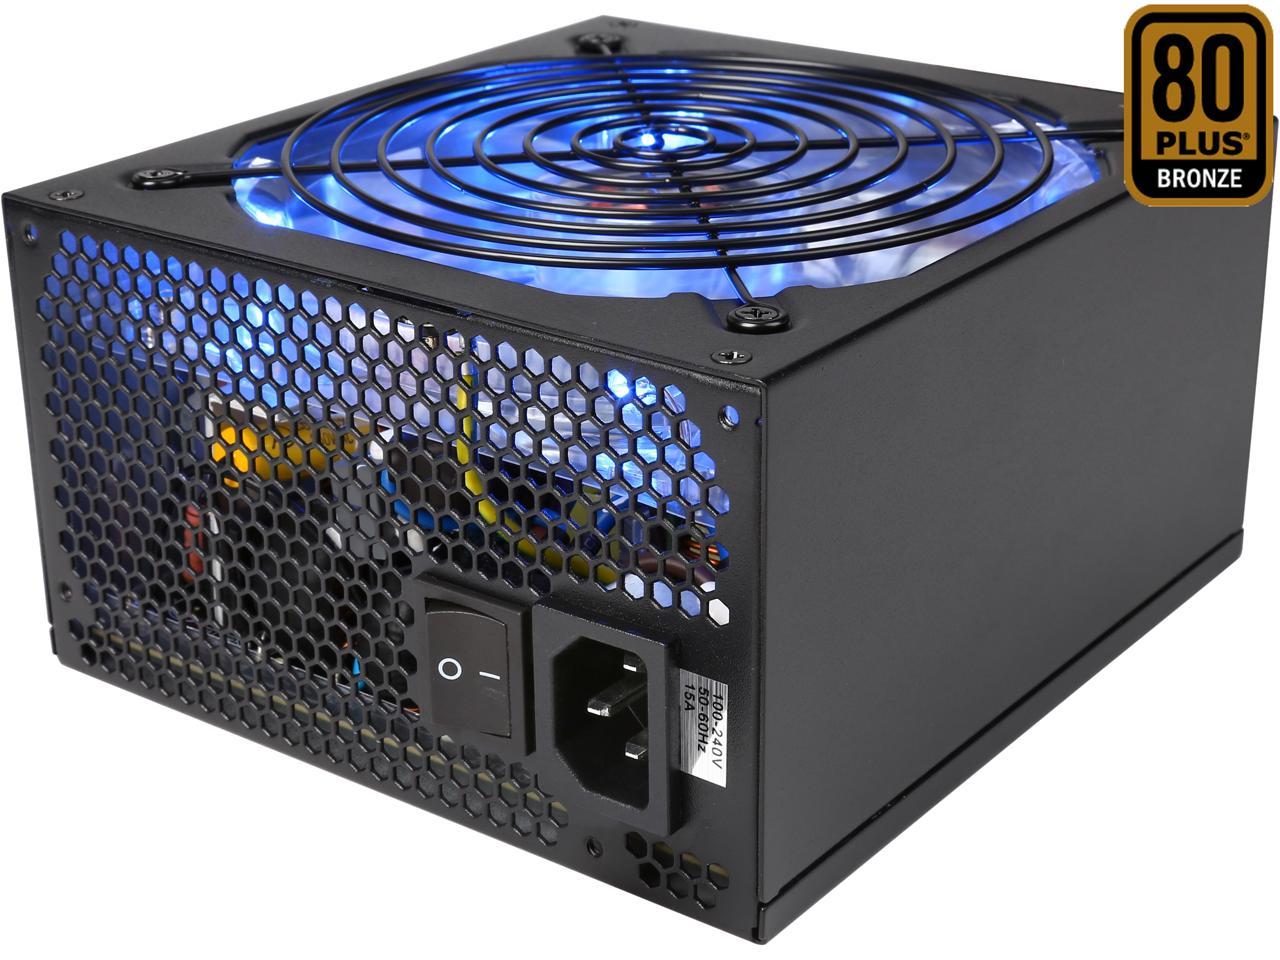 New 1200-Watt 4x PCIe SLI Gaming PC 8x SATA Black Power Supply ATX/EPS 12V PSU 